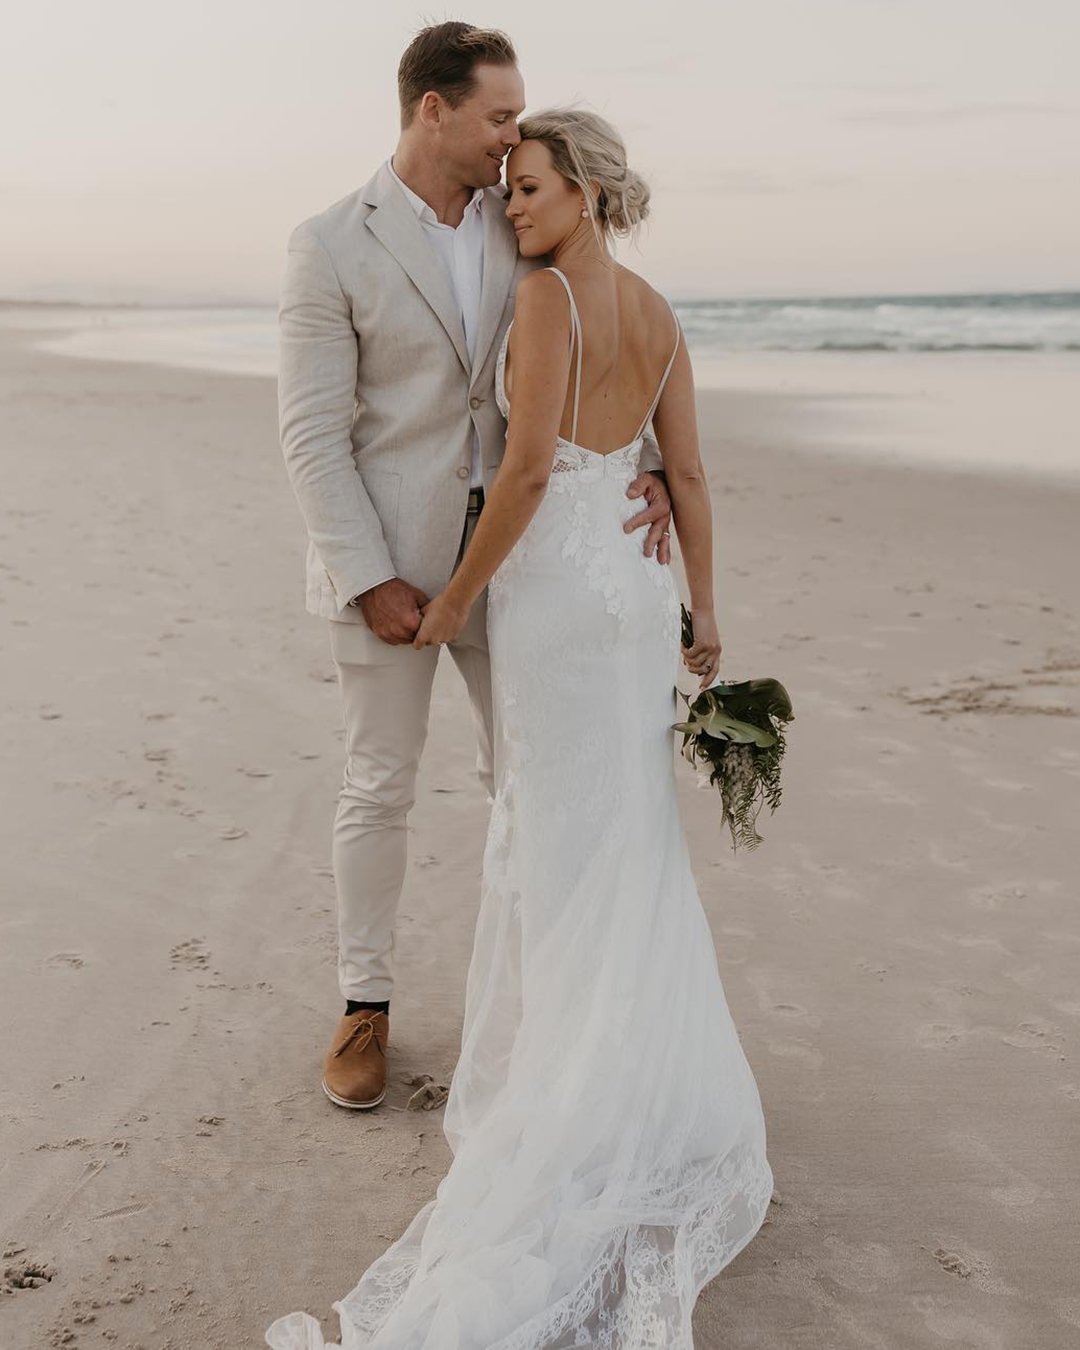 mens wedding attire light jackets beach wandererandthewild